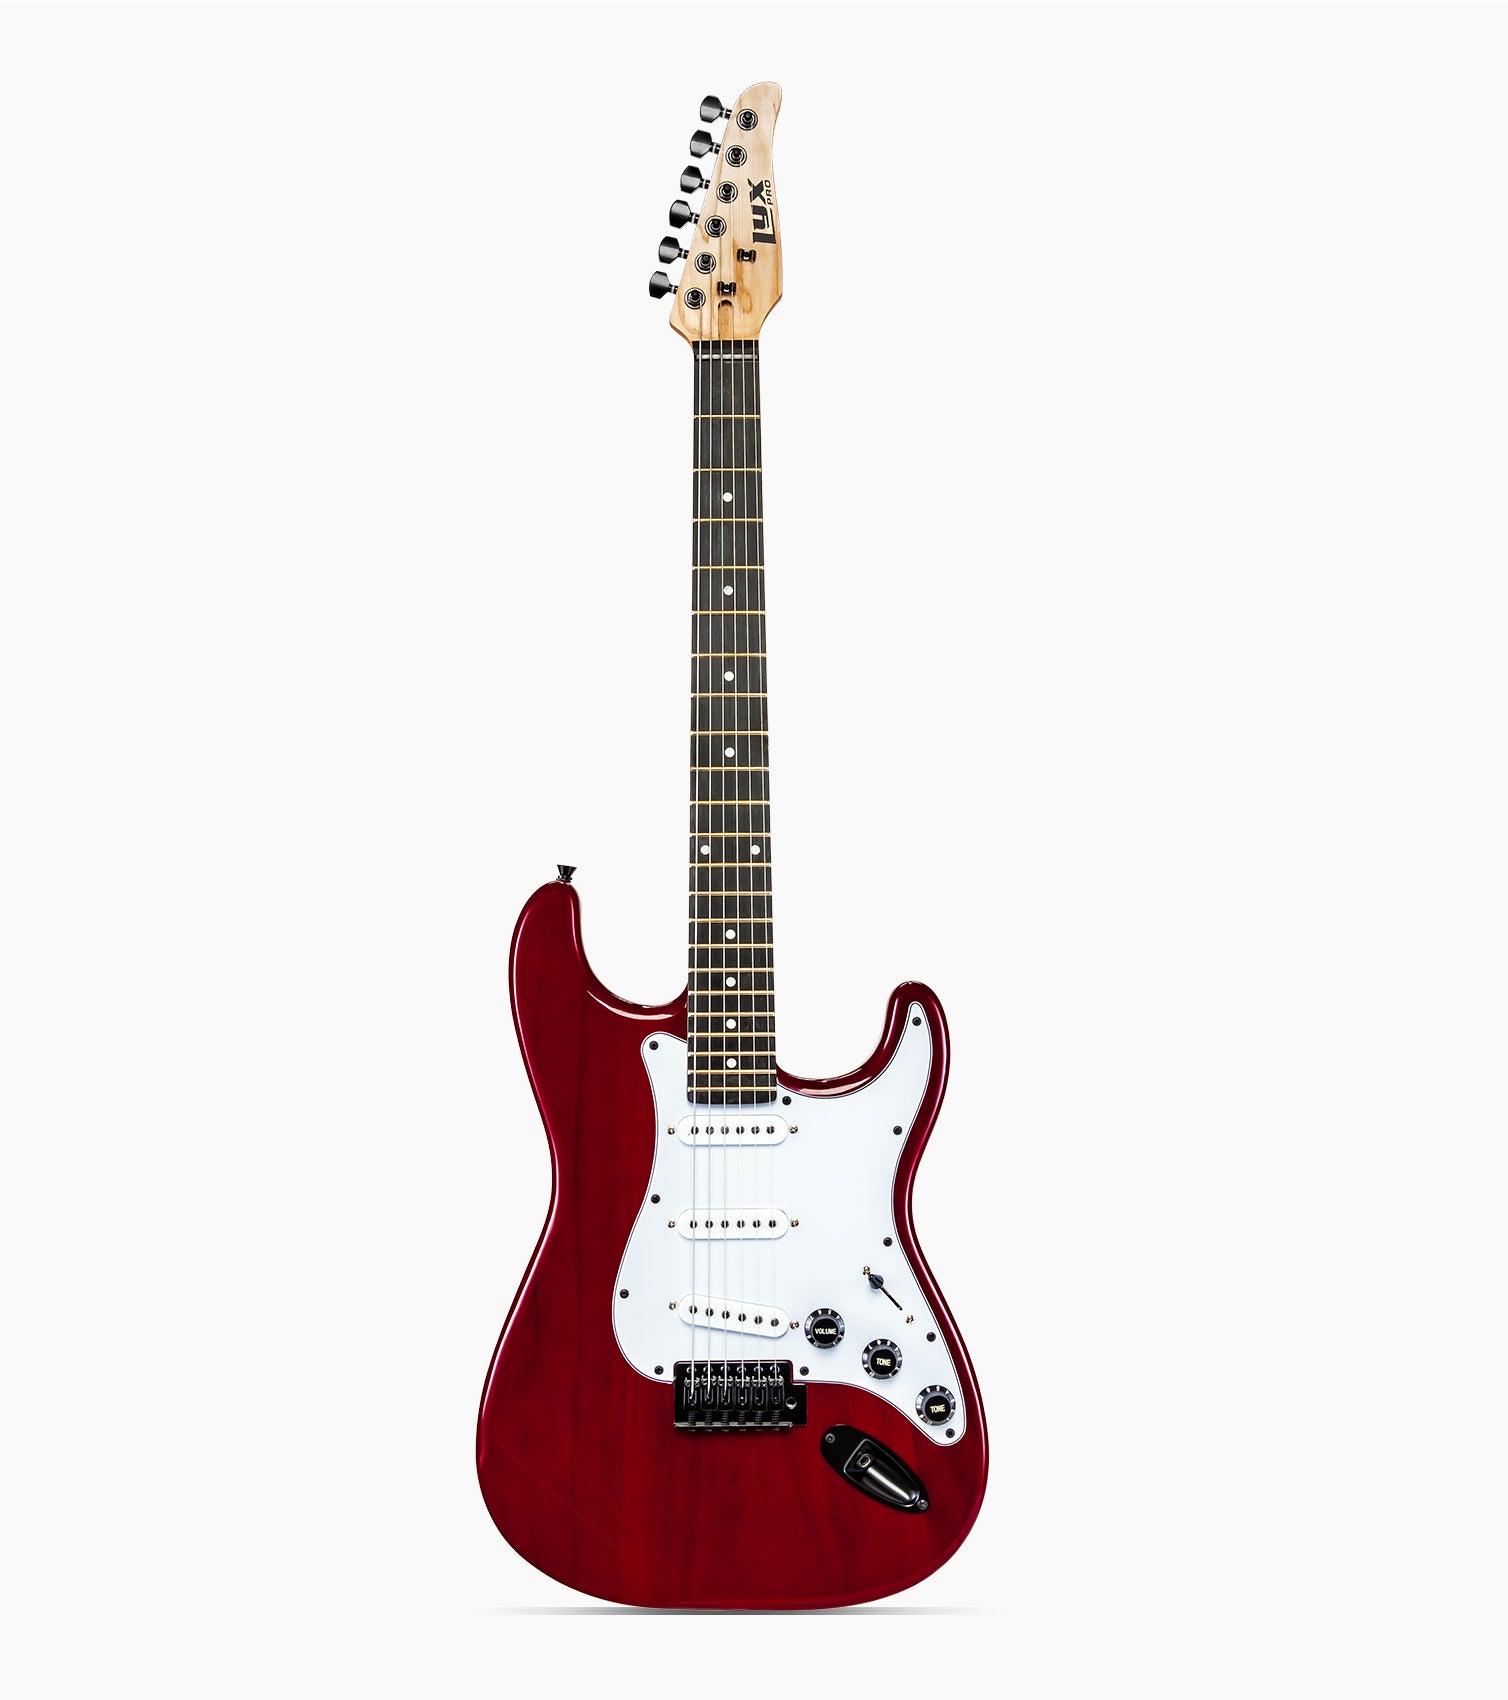 Red double-cutaway beginner electric guitar